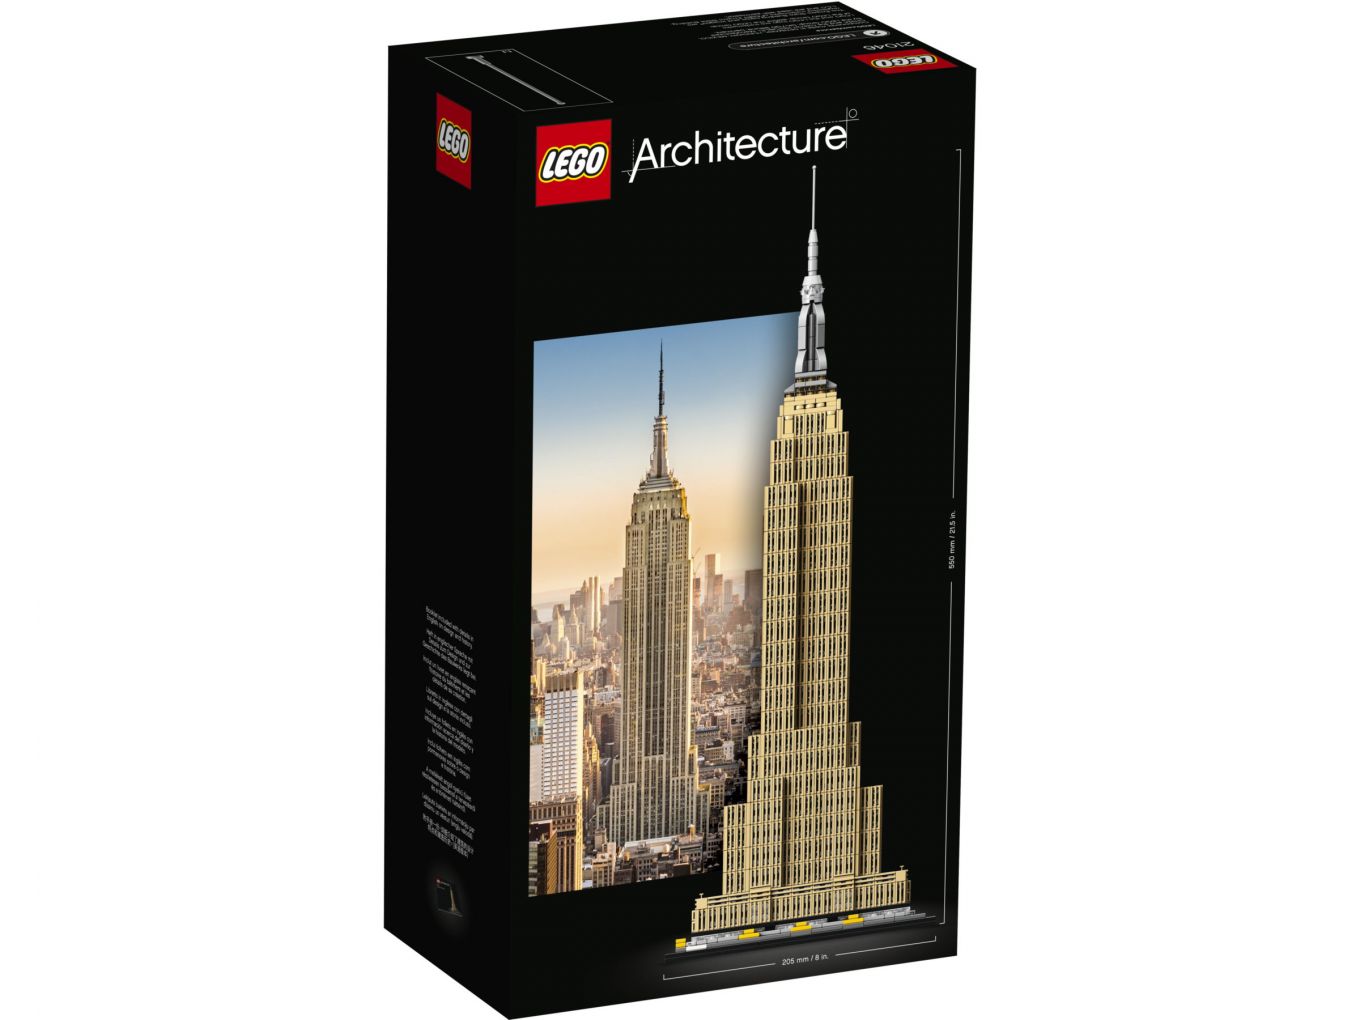 LEGO Architecture Empire State Building set #21046